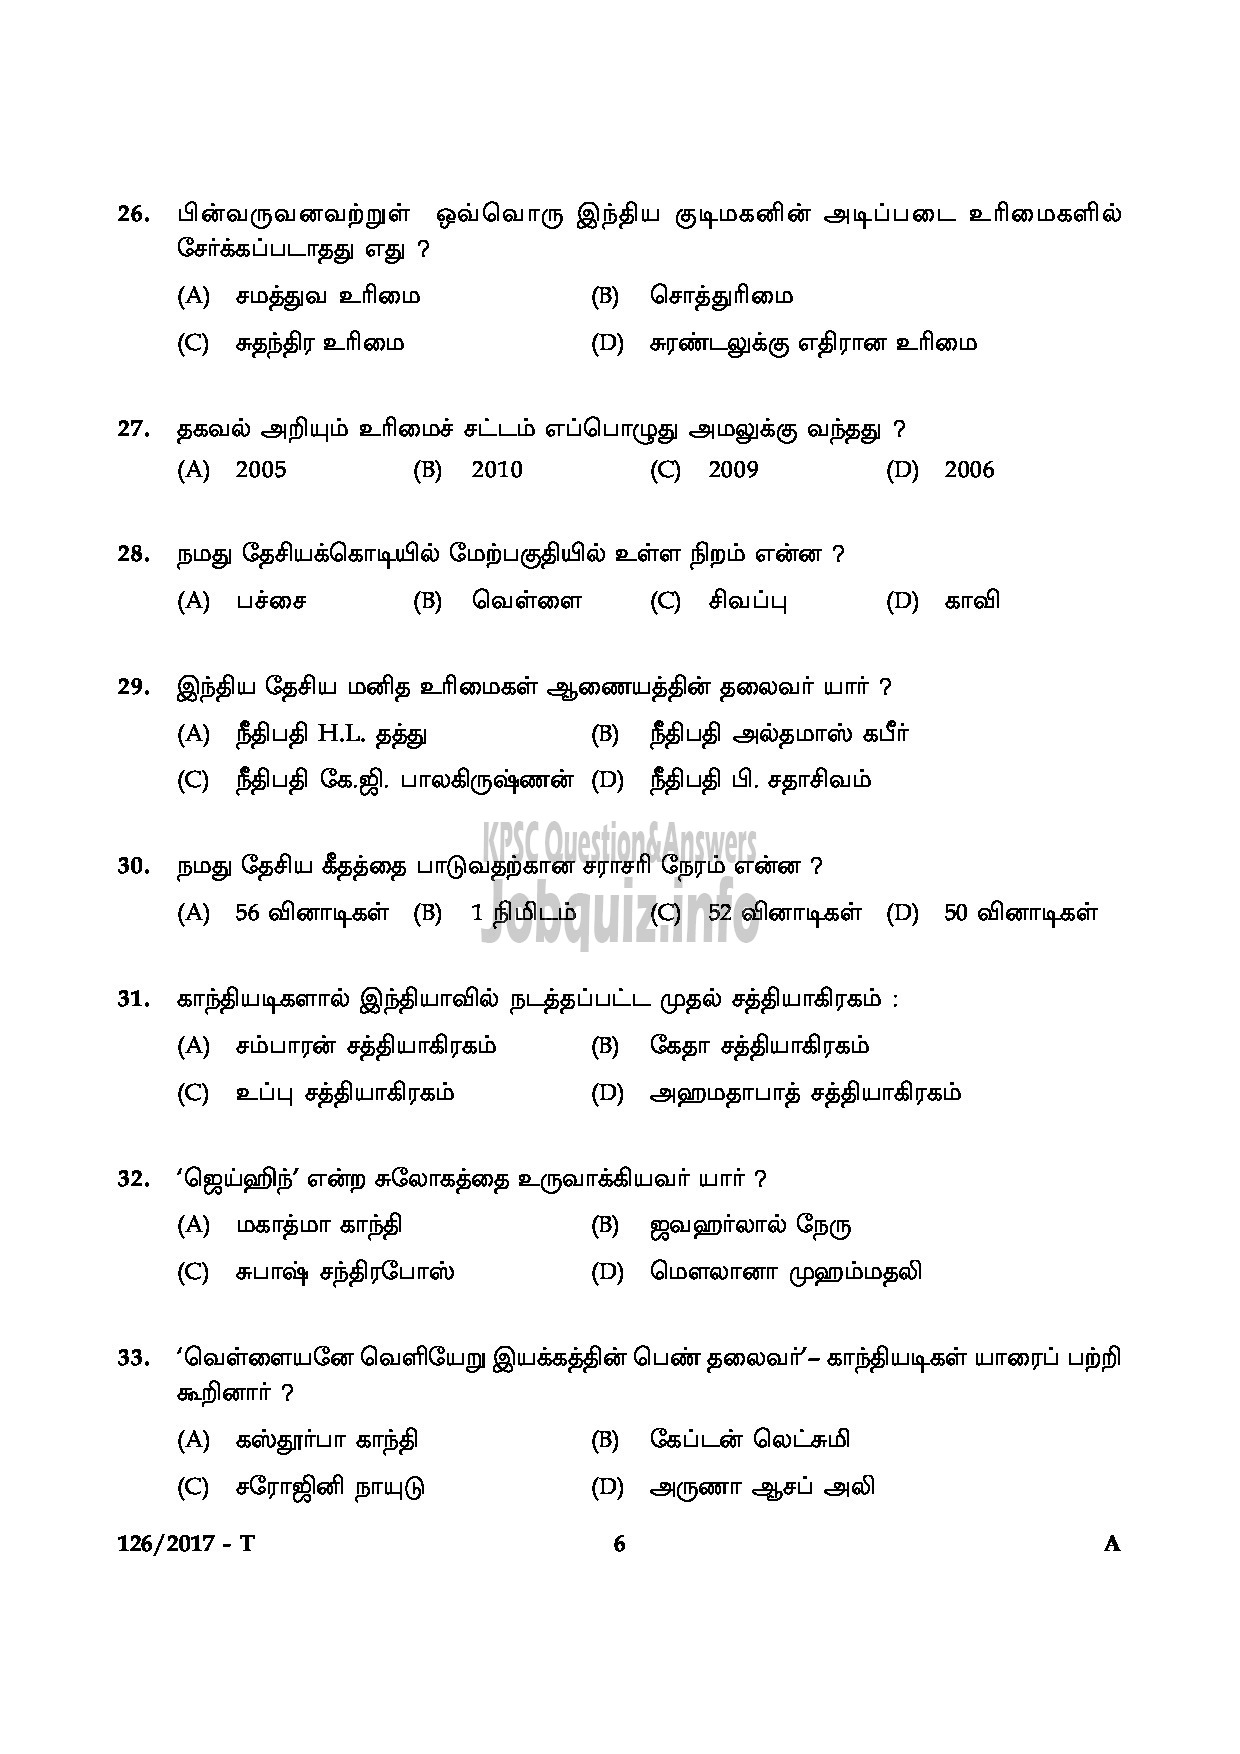 Kerala PSC Question Paper - LAST GRADE SERVANTS VARIOUS GOVT.OWNED COMPANIES/CORPORATIONS/BOARDS TAMIL-6